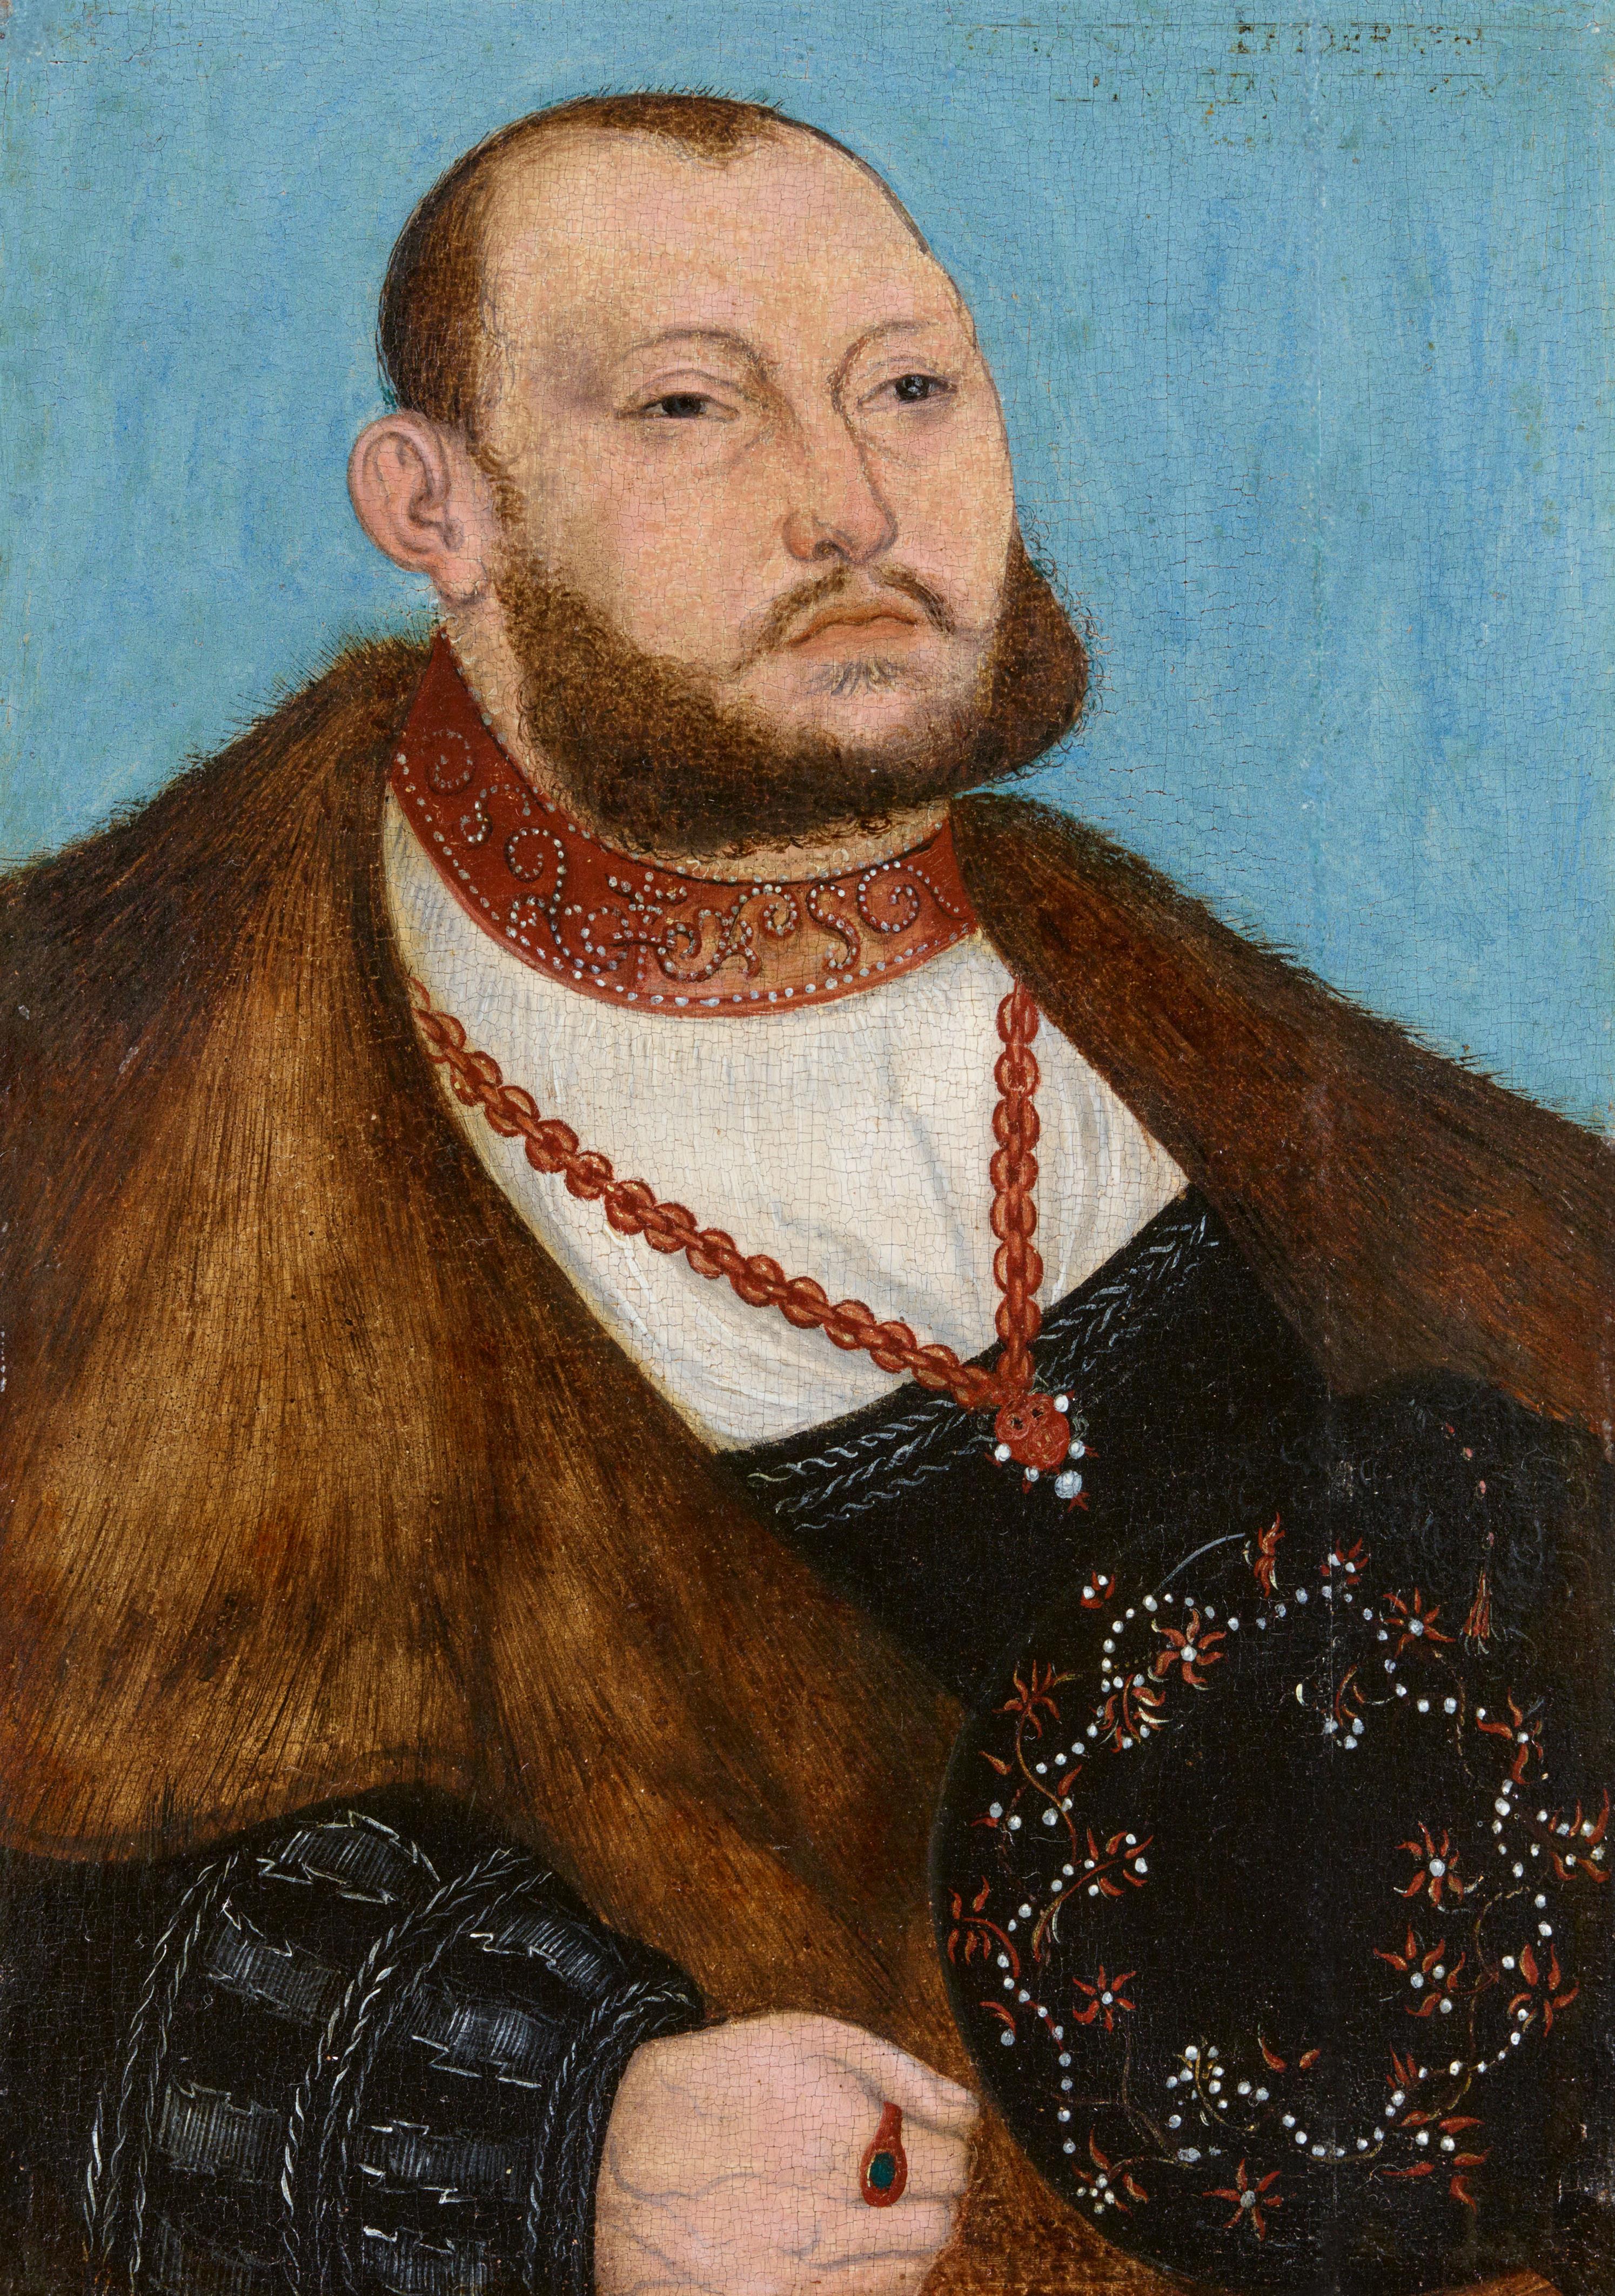 Lucas Cranach the Elder, studio of - Portrait of Prince Elector Johann Friedrich I of Saxony, called the Magnanimous - image-1